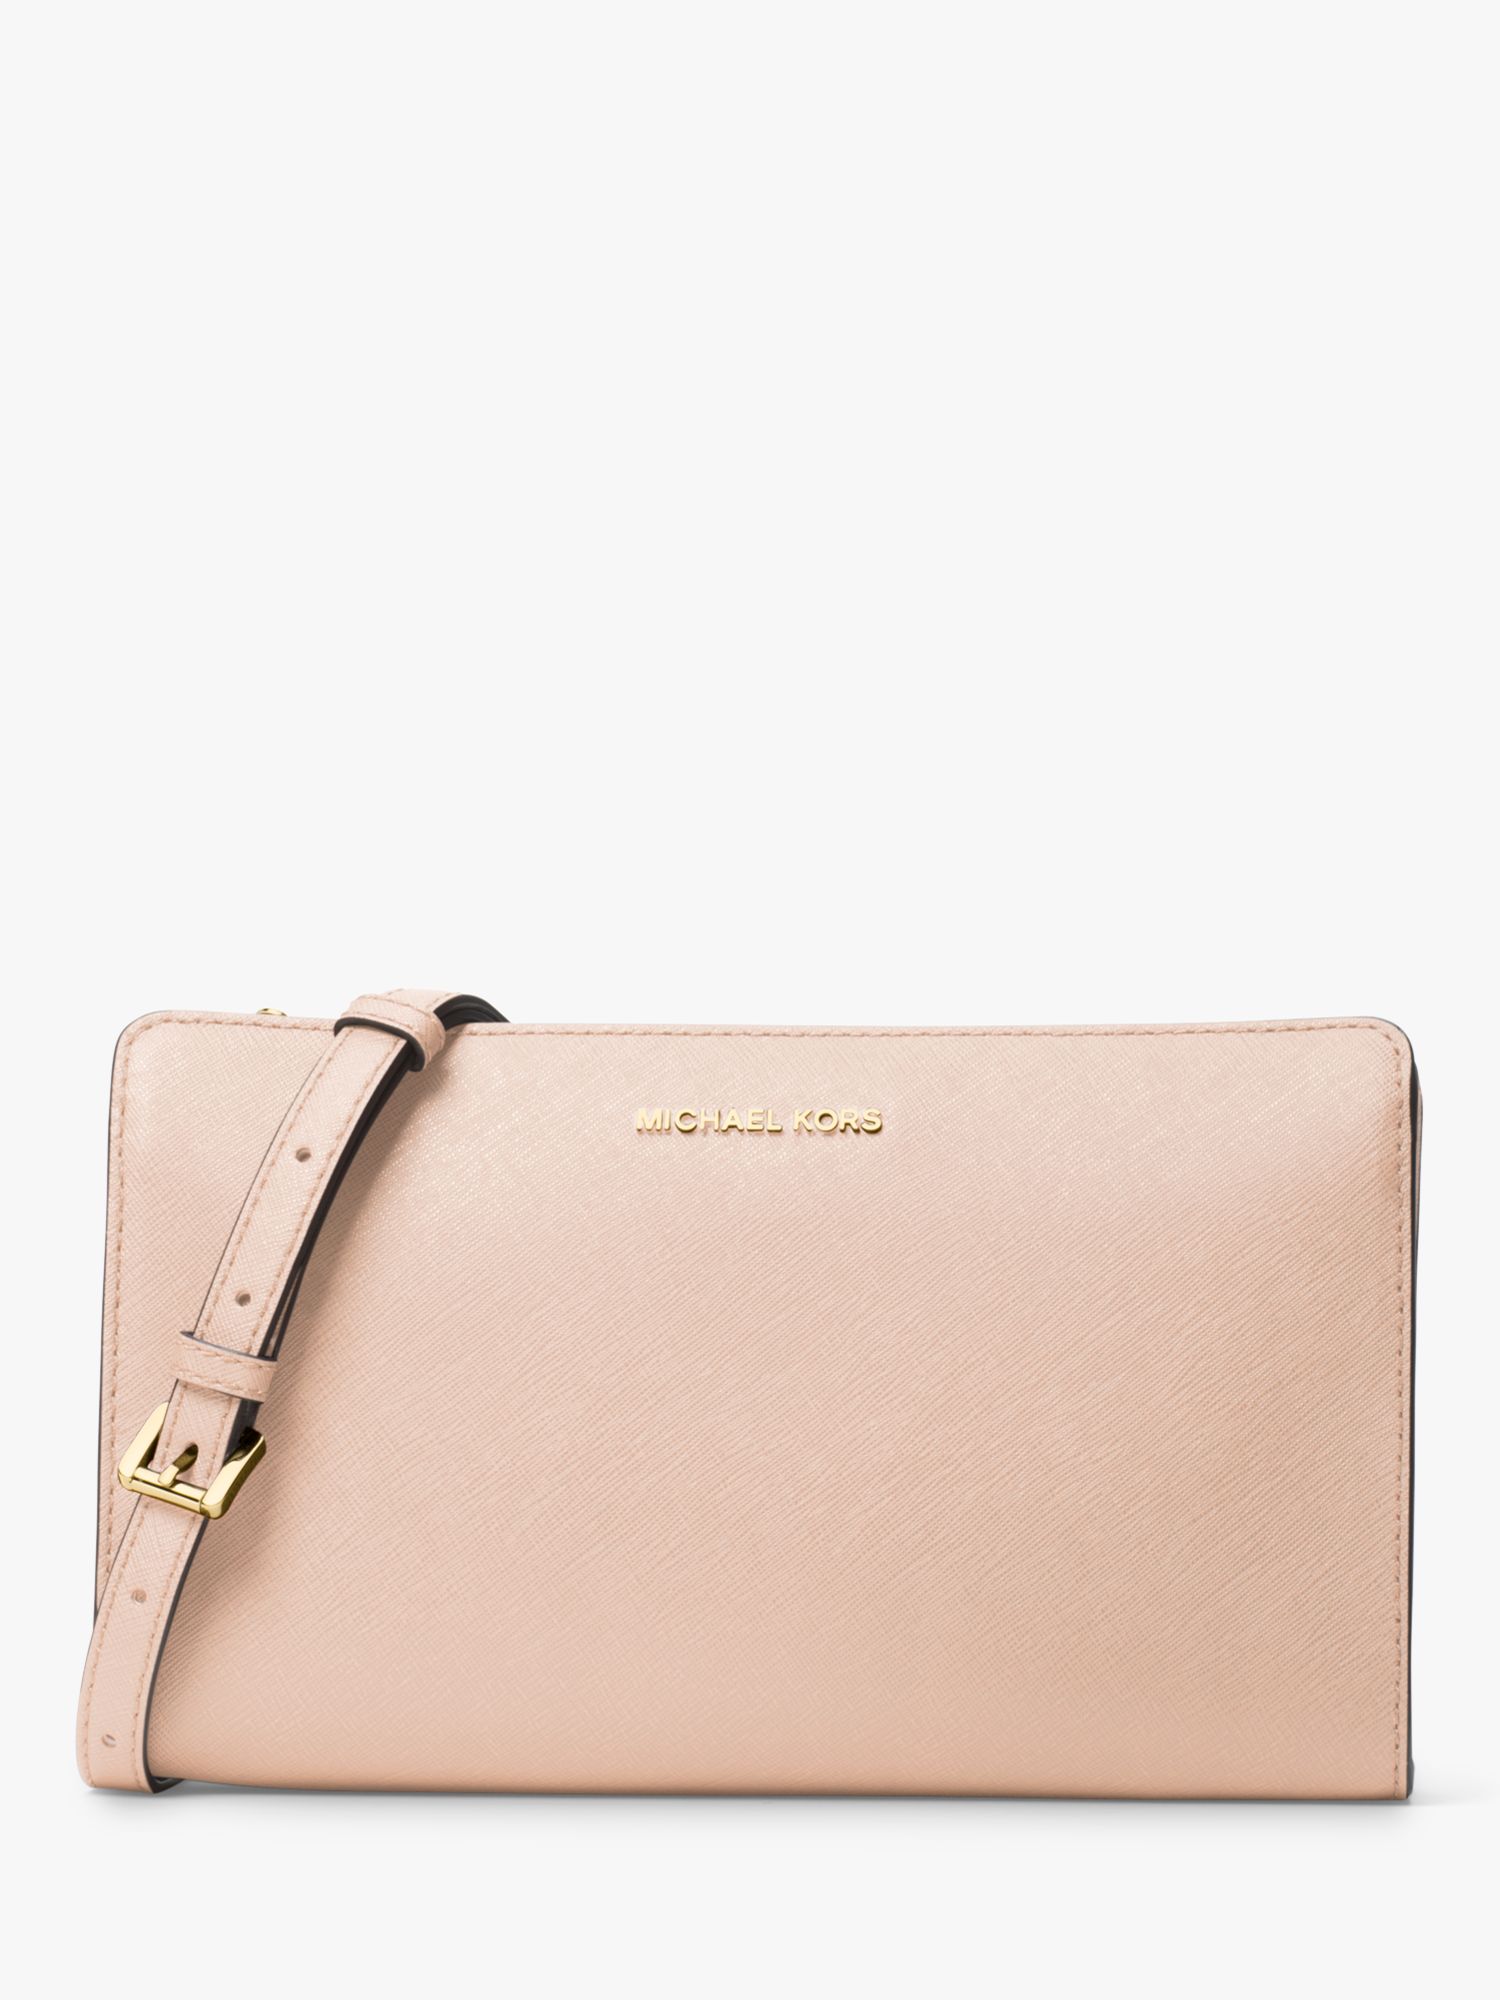 light pink mk purse